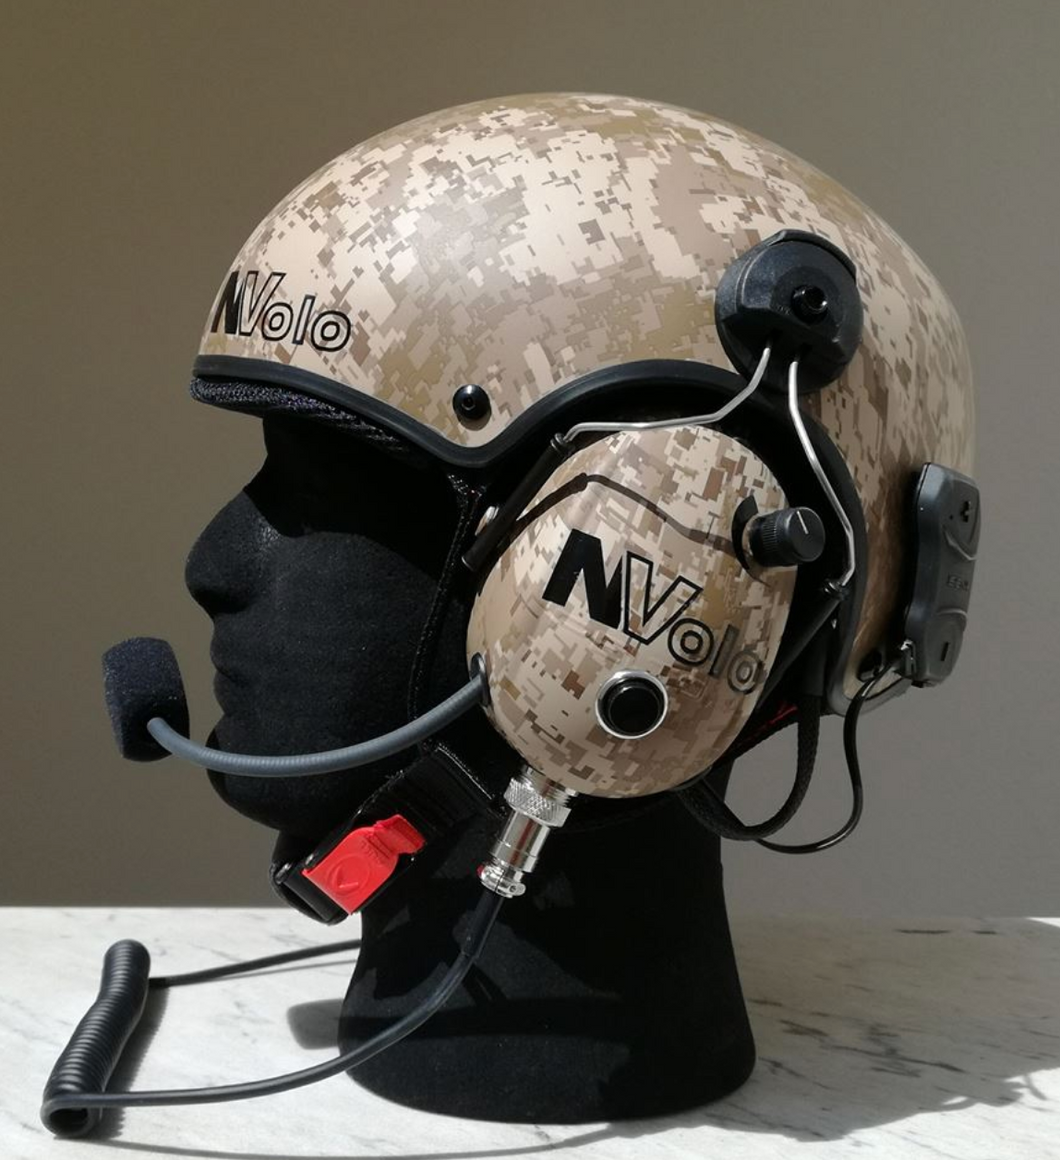 NVolo Helmets